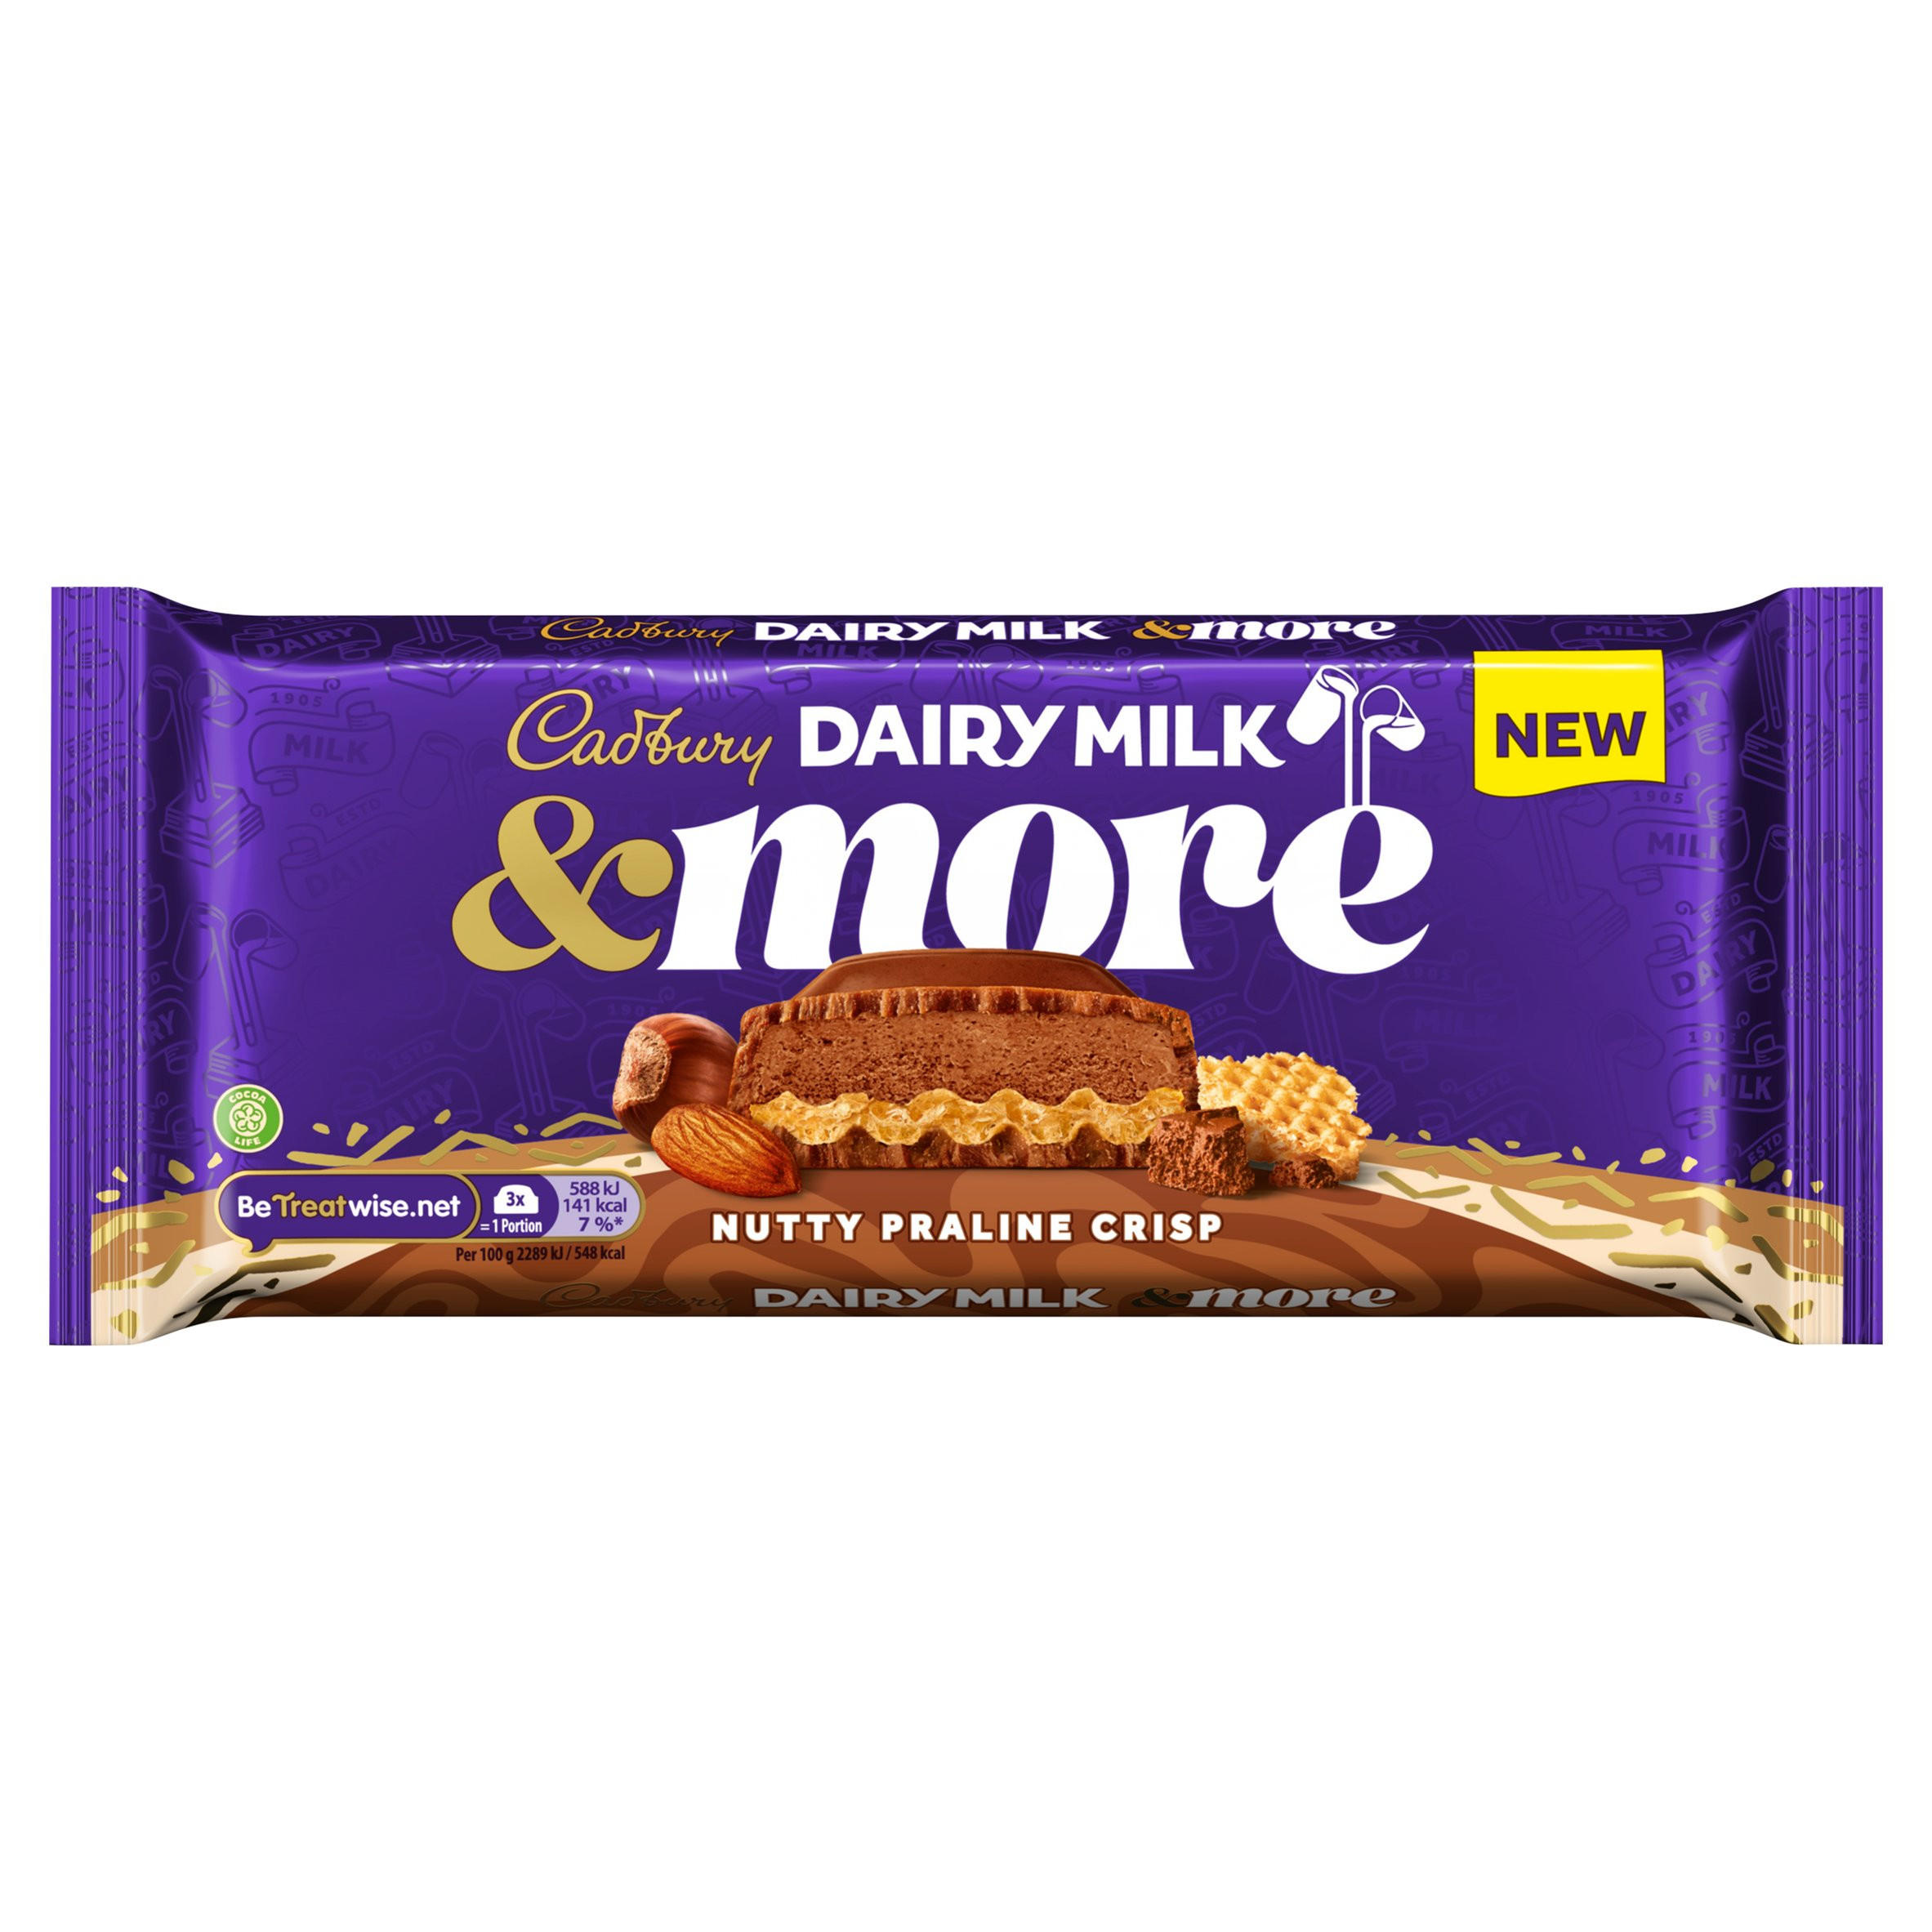 Cadbury Dairy Milk &More Nutty Praline Crisp Milk Chocolate Bar 180g ...